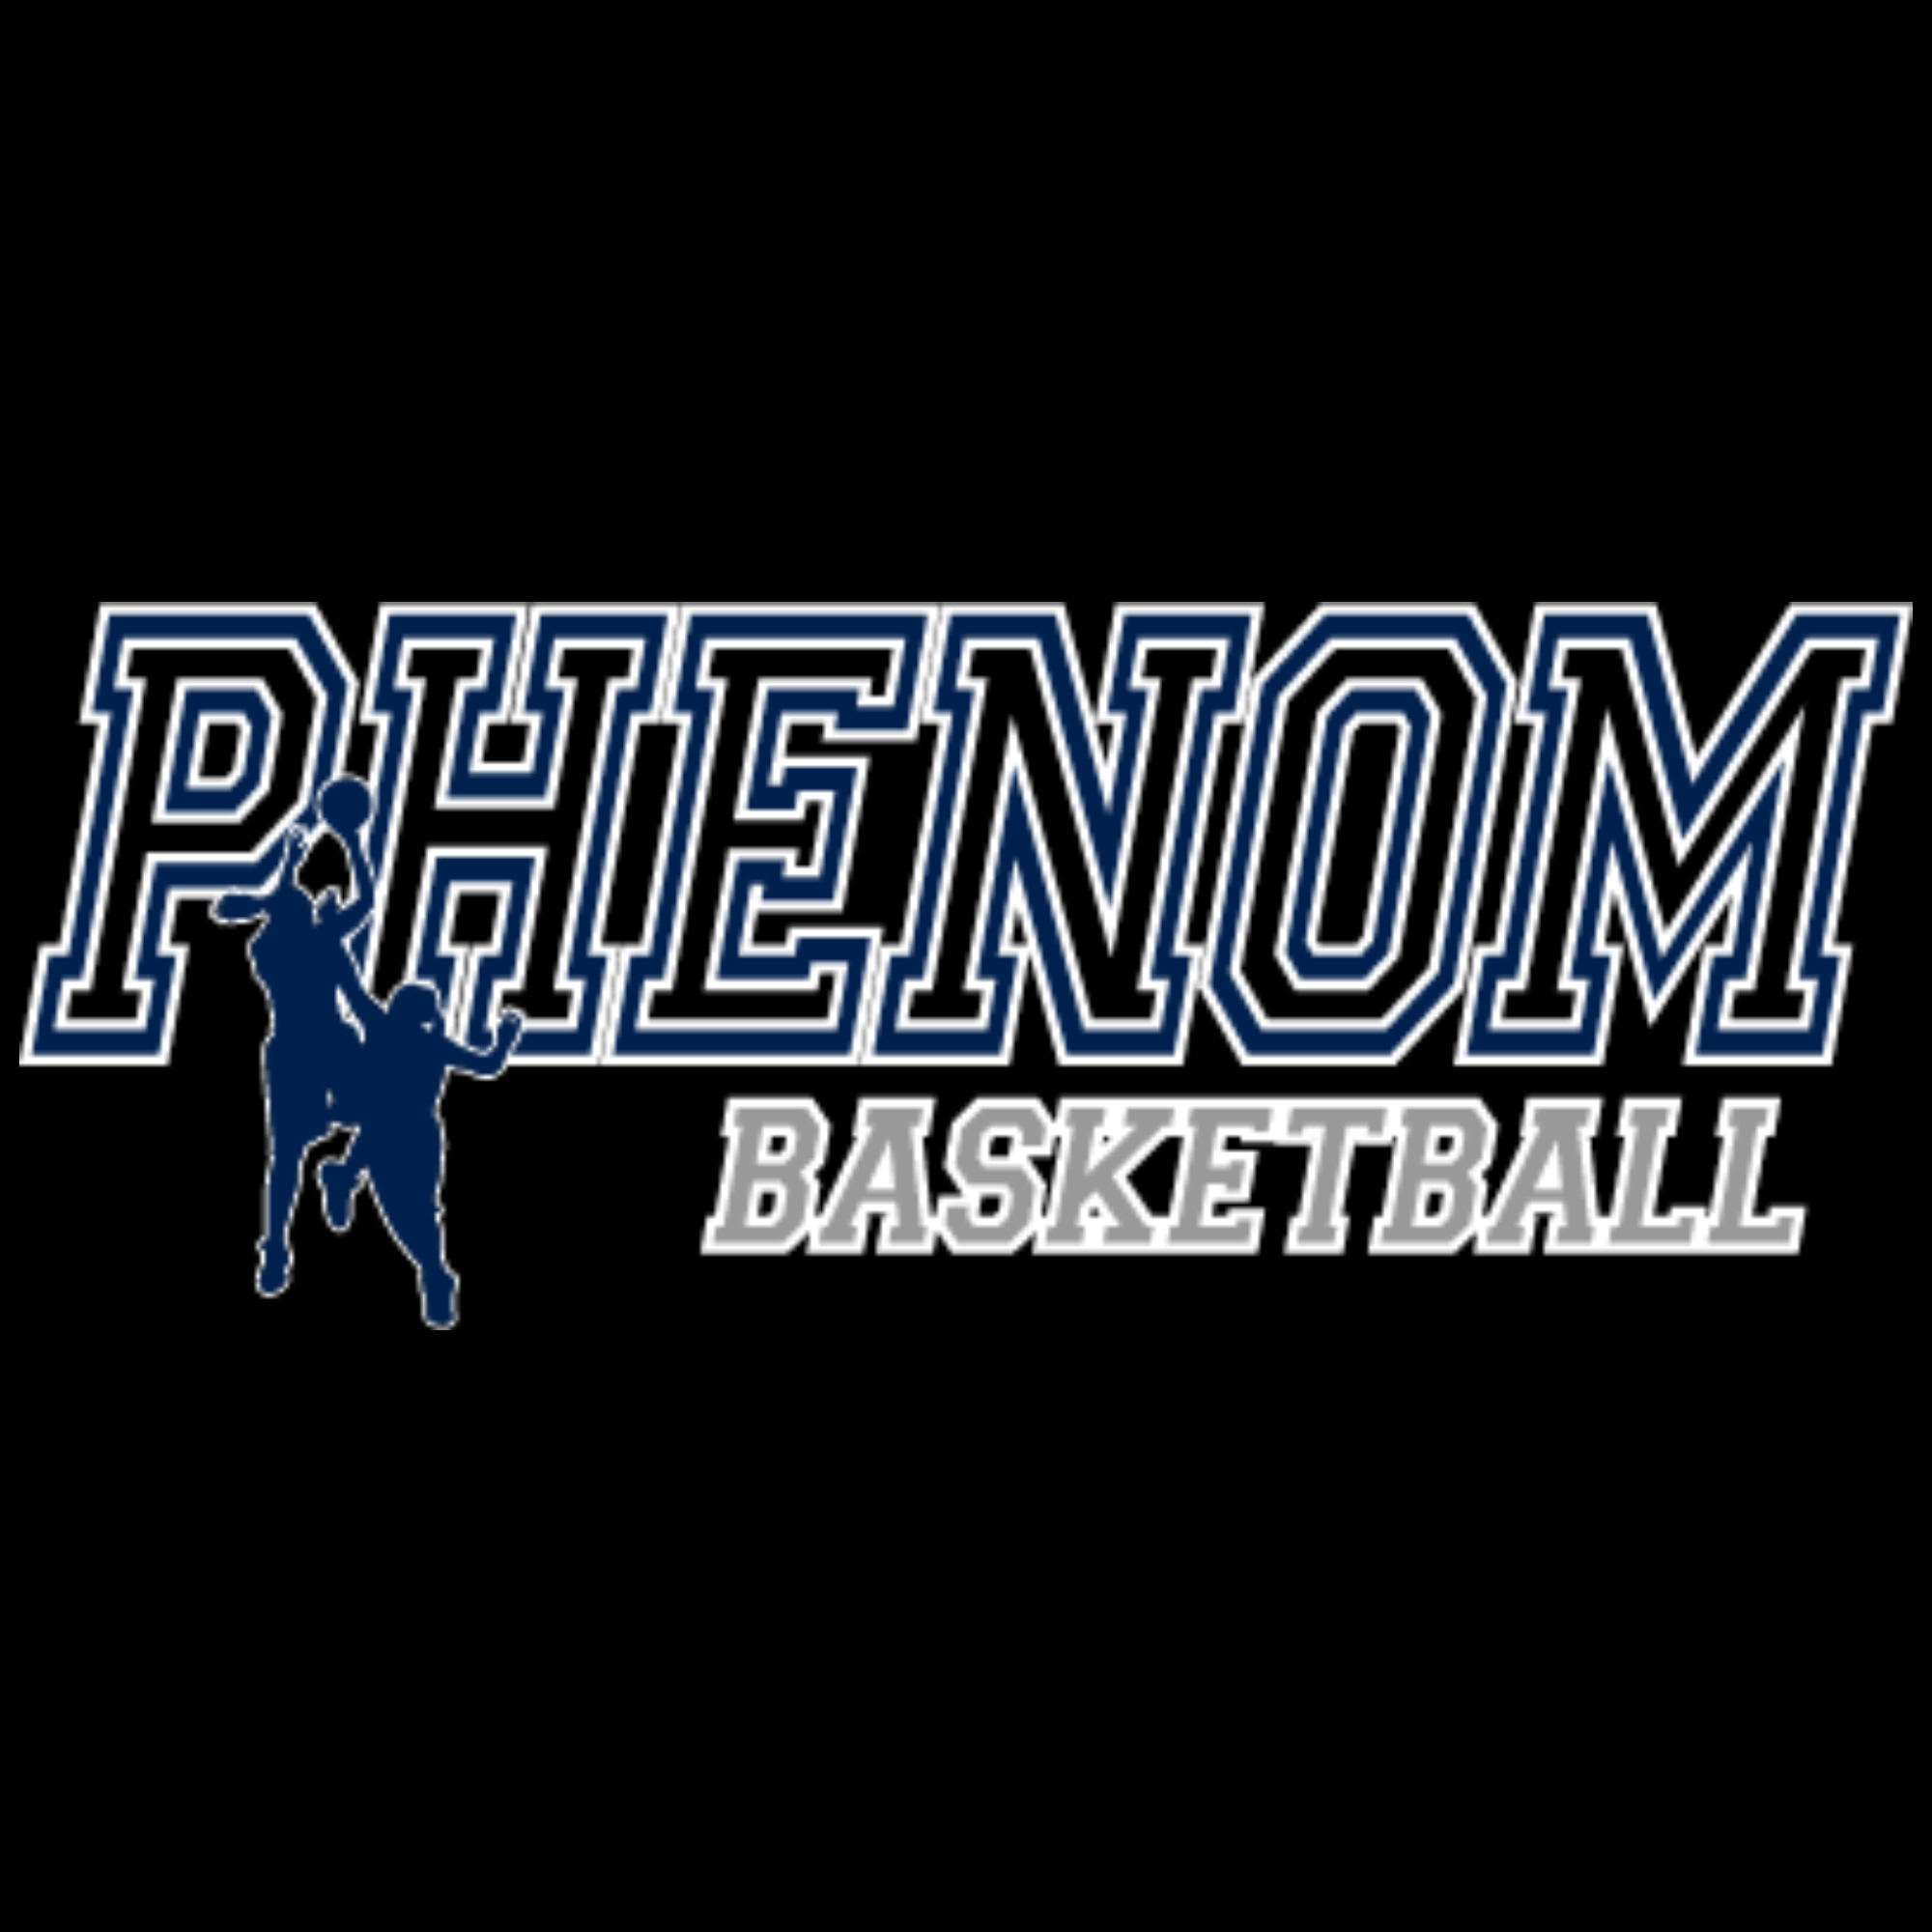 The official logo of Missouri Phenom